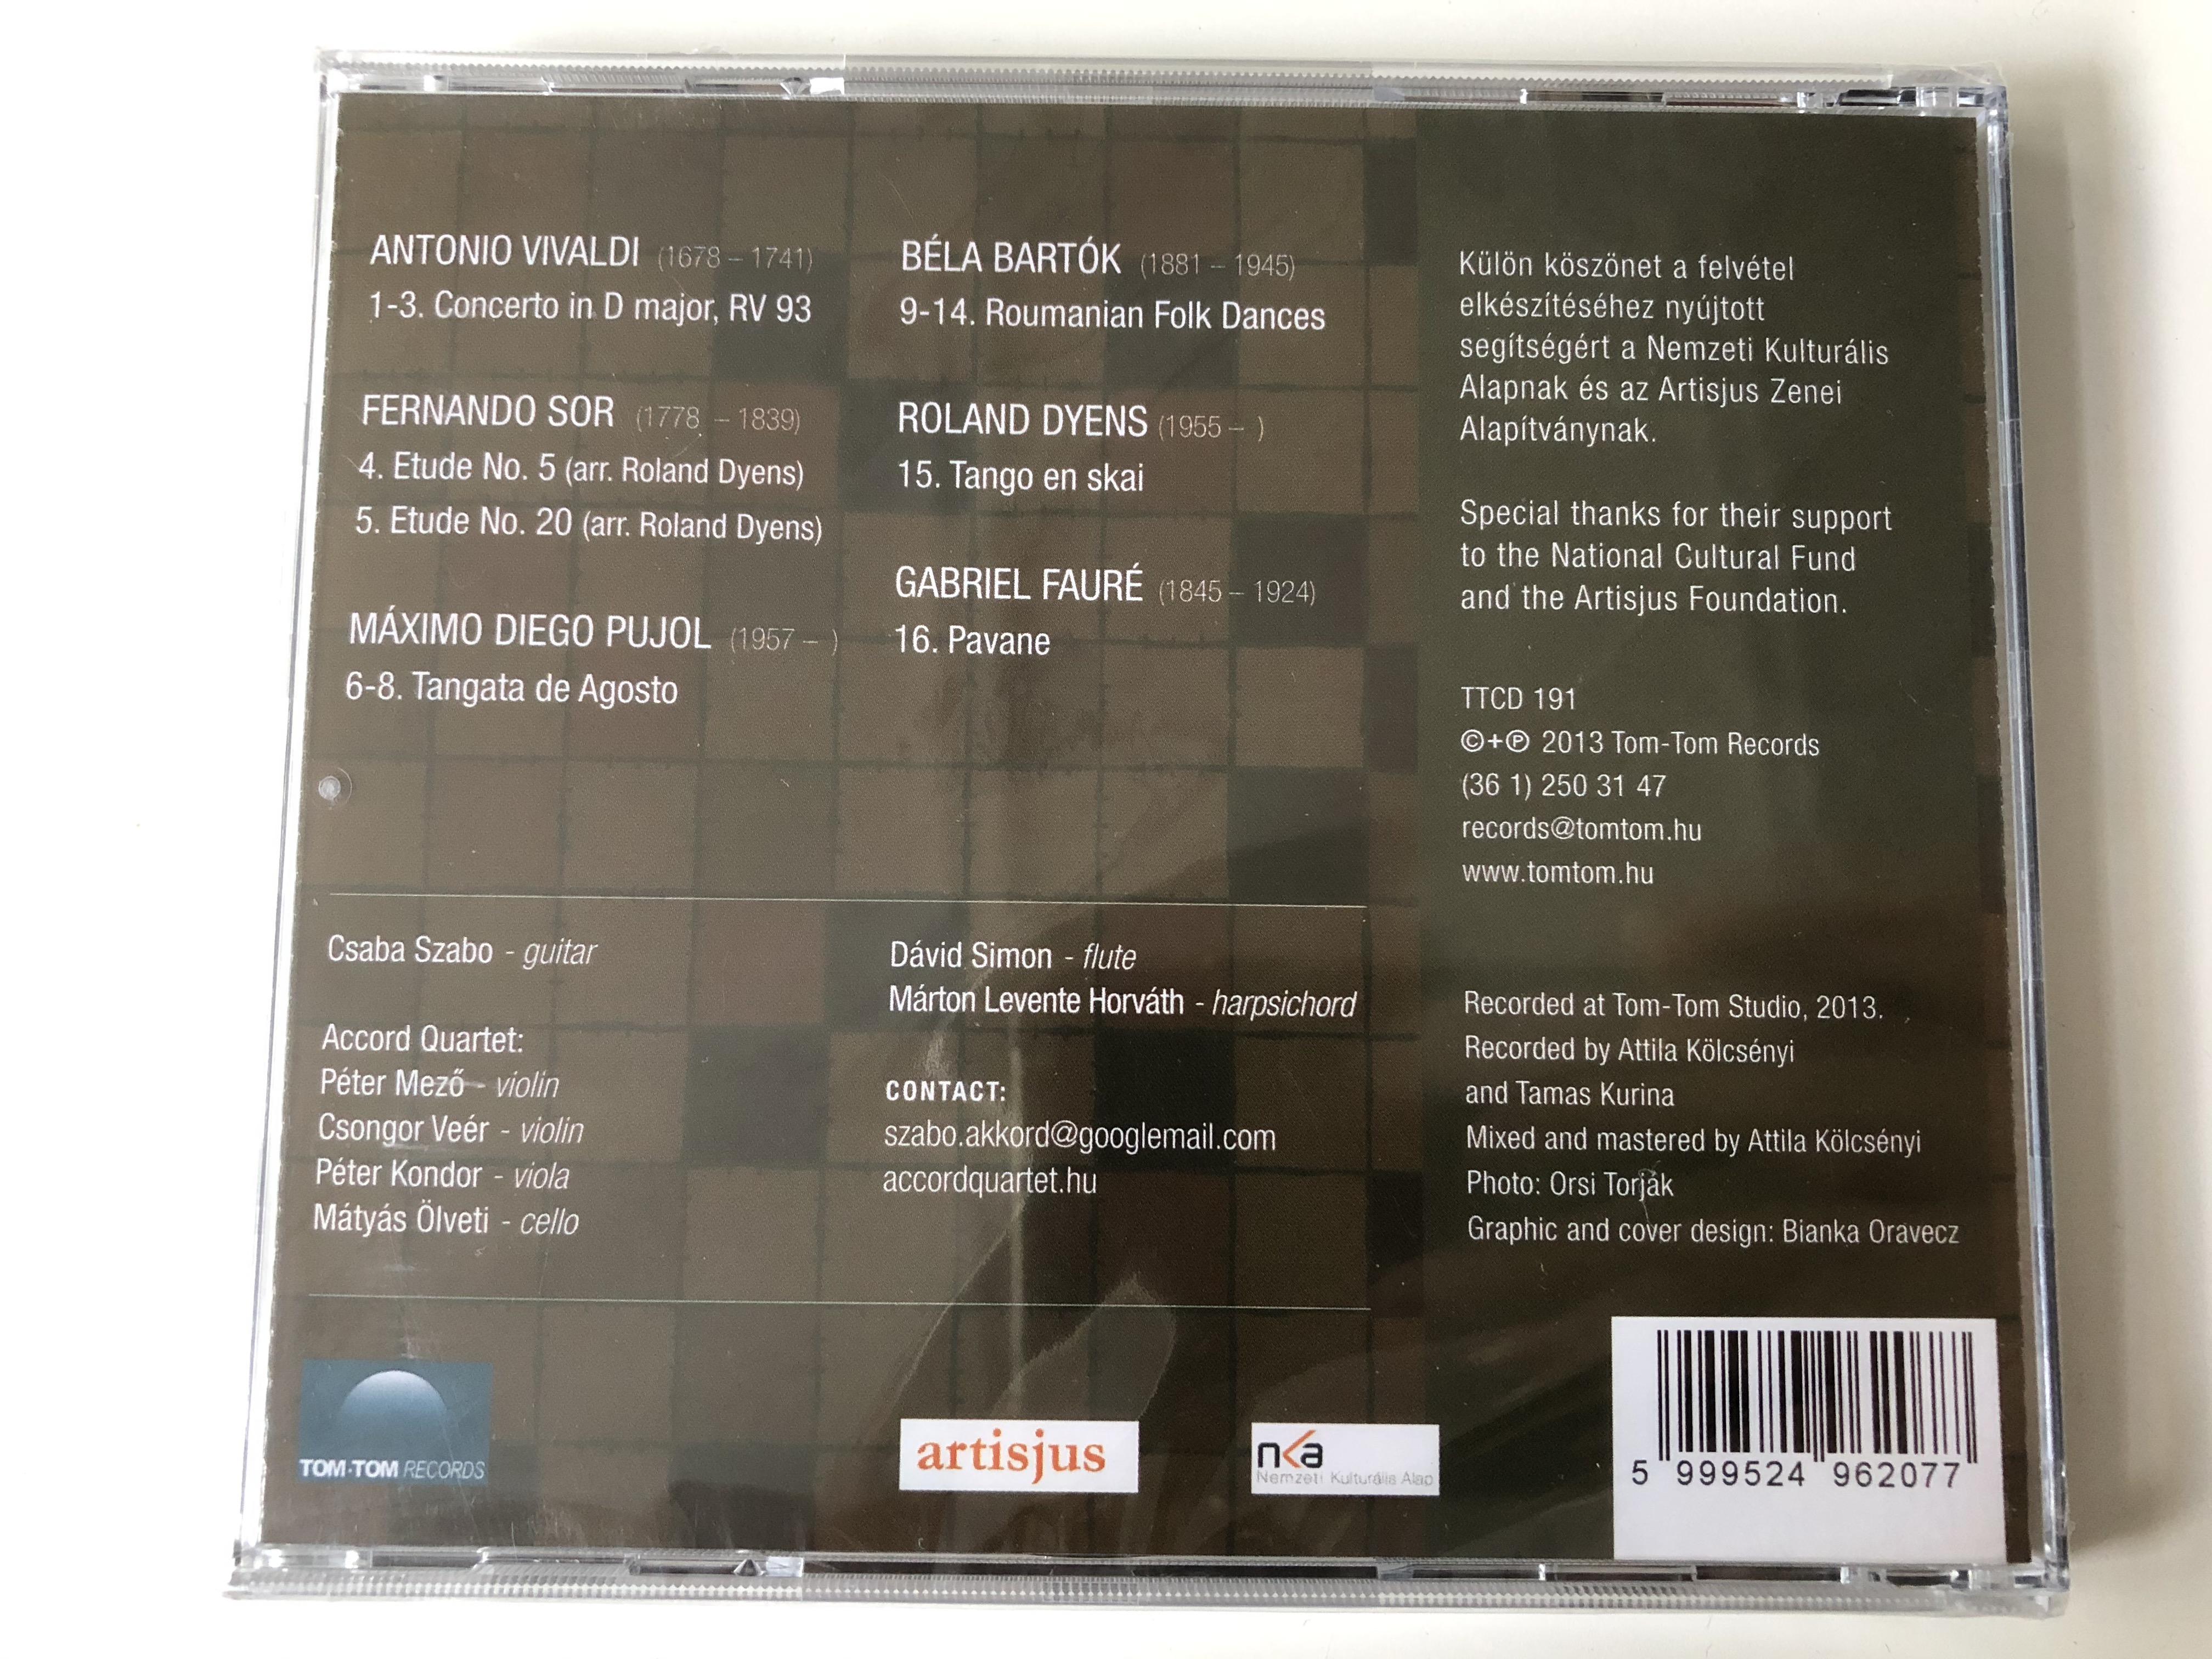 csaba-szabo-accord-quartet-pick-up-the-pieces-d-vid-simon-flute-tom-tom-records-audio-cd-2013-ttcd-191-2-.jpg